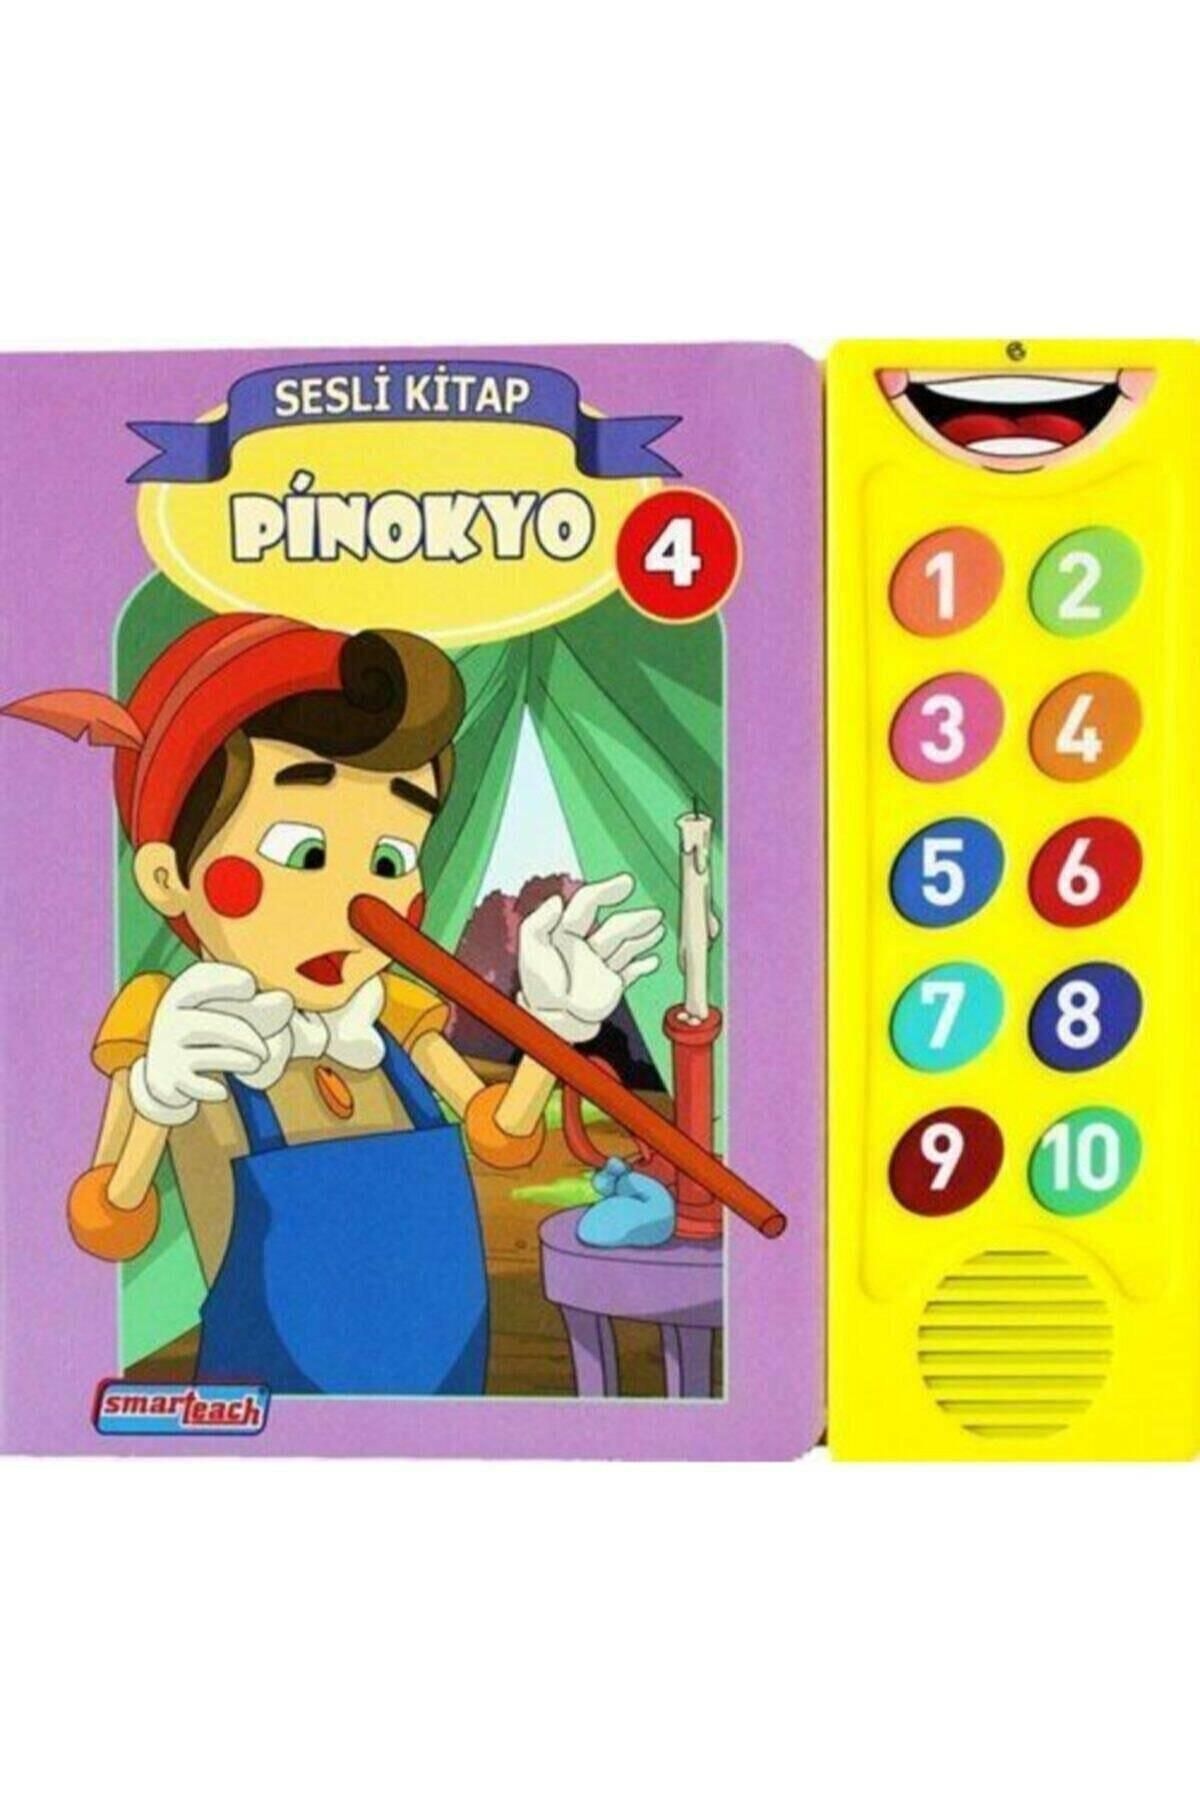 SMART-TEACH Pinokyo 4 (SESLİ KİTAP)